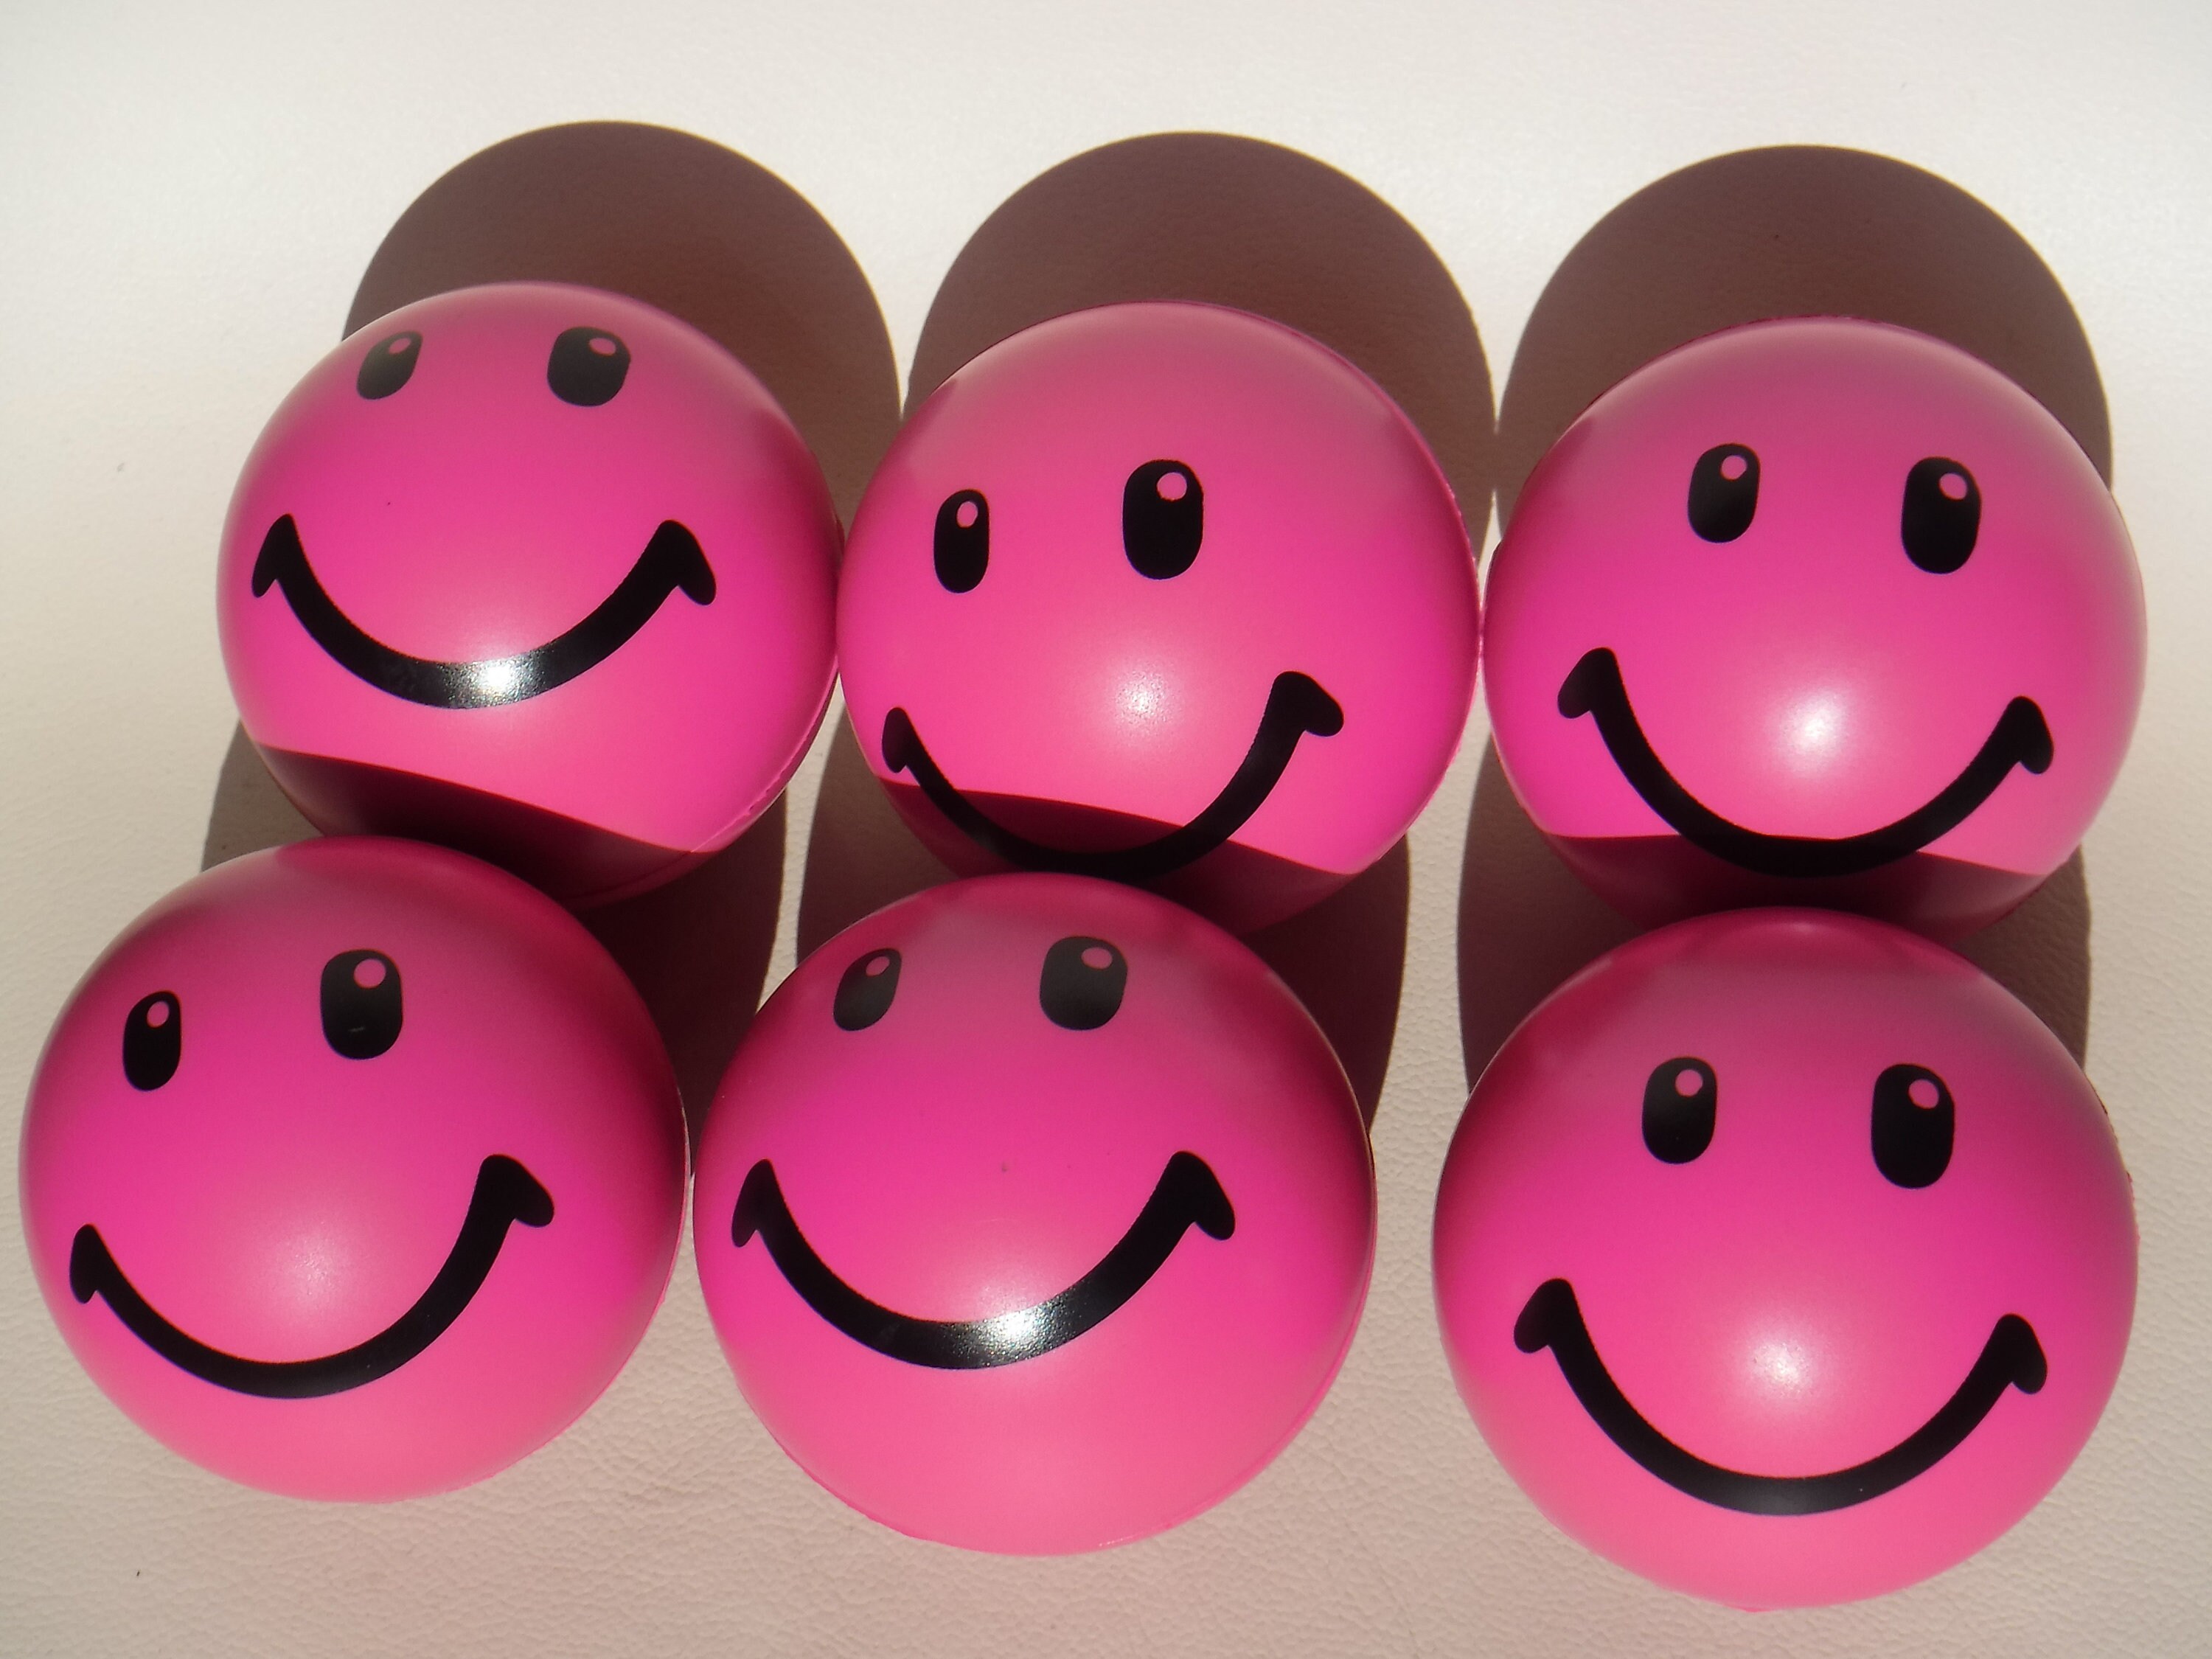 Stress Balls x 6 in Pink by SressCHECK Stress Ball Sensory | Etsy